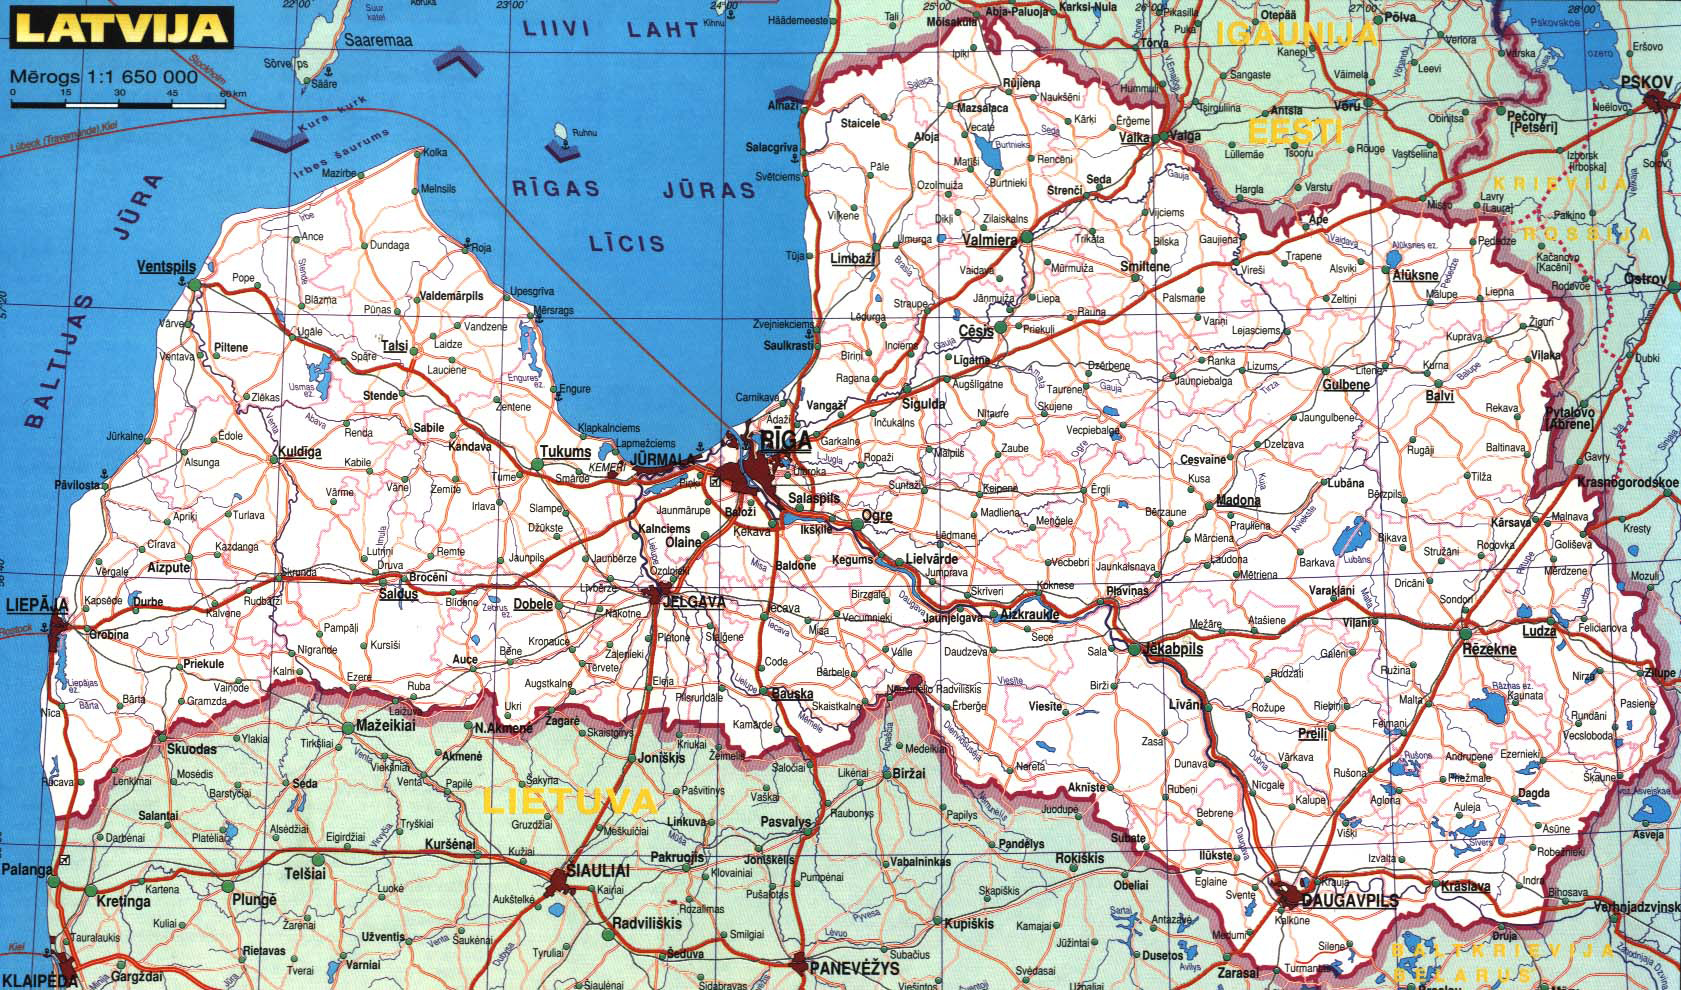 Detailed road map of Latvia. Latvia detailed road map | Vidiani.com